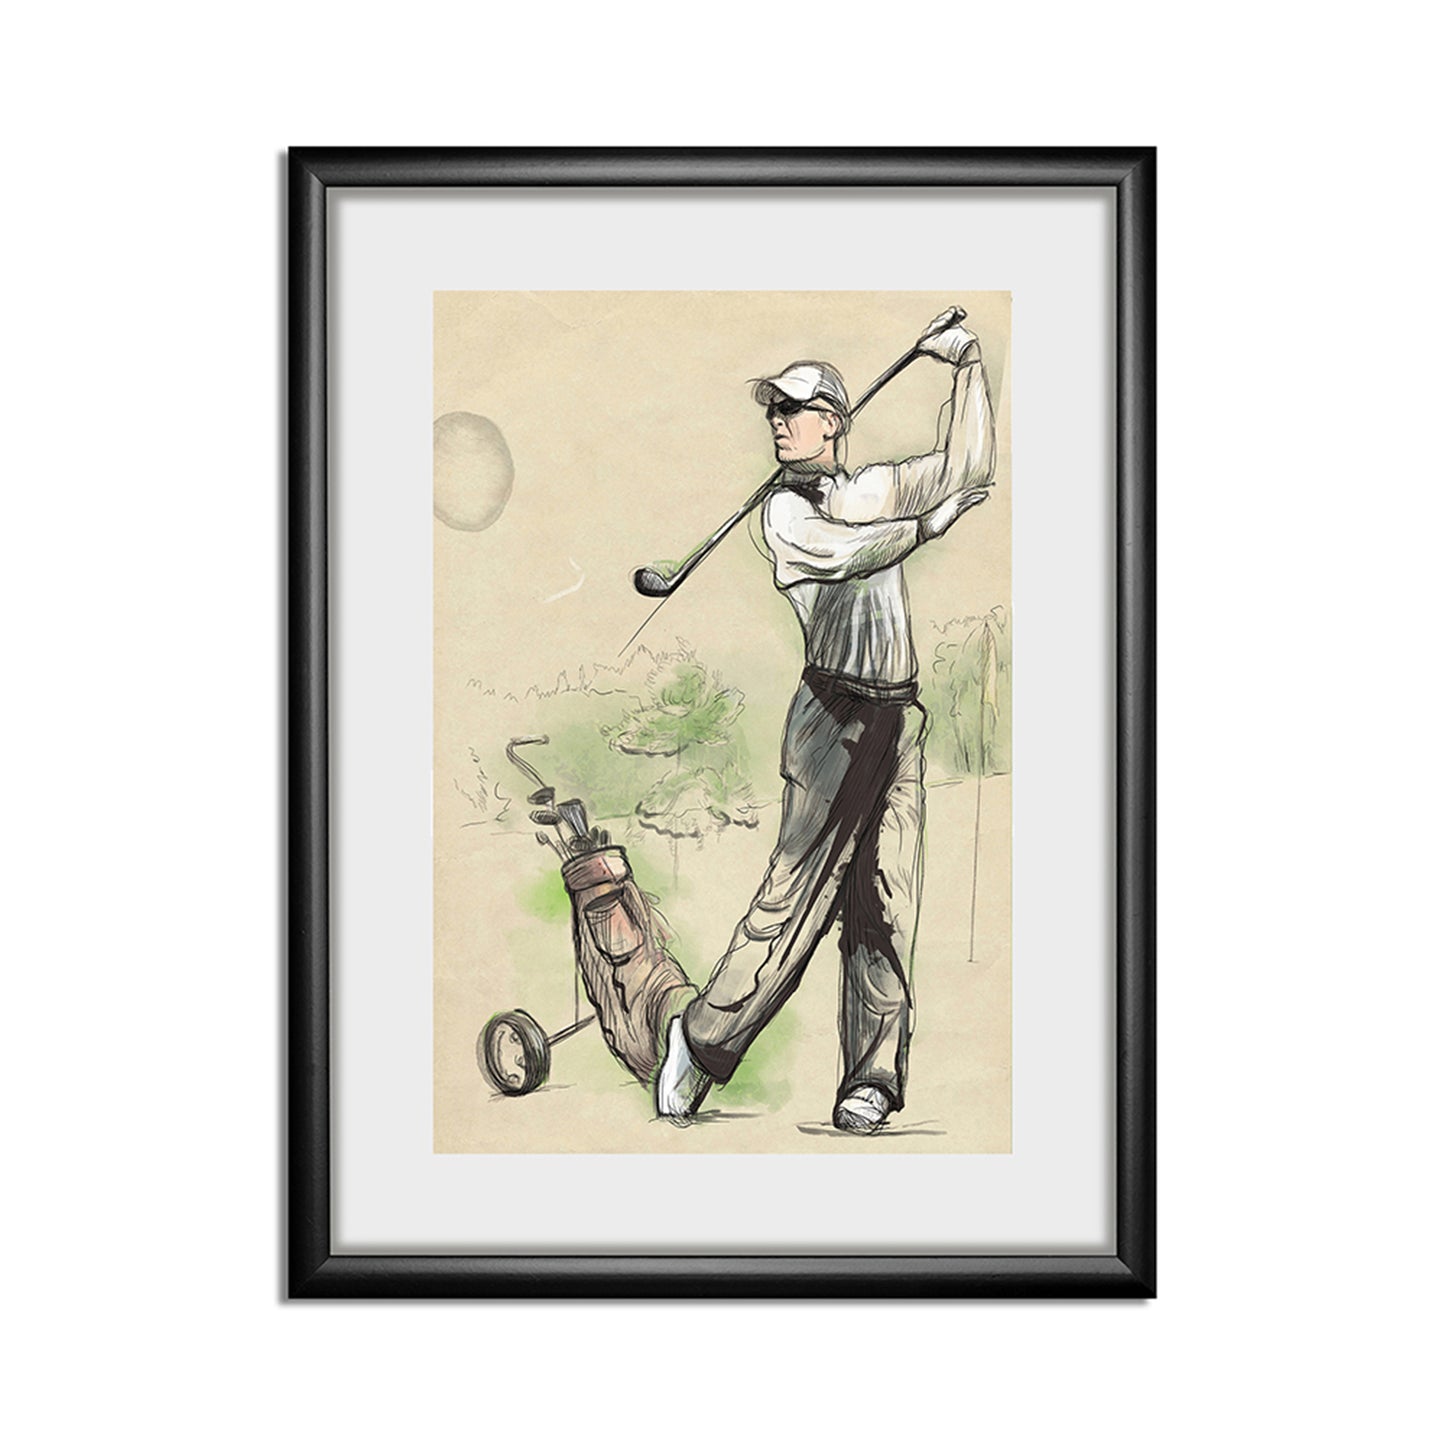 Rahmenbild - Golfer